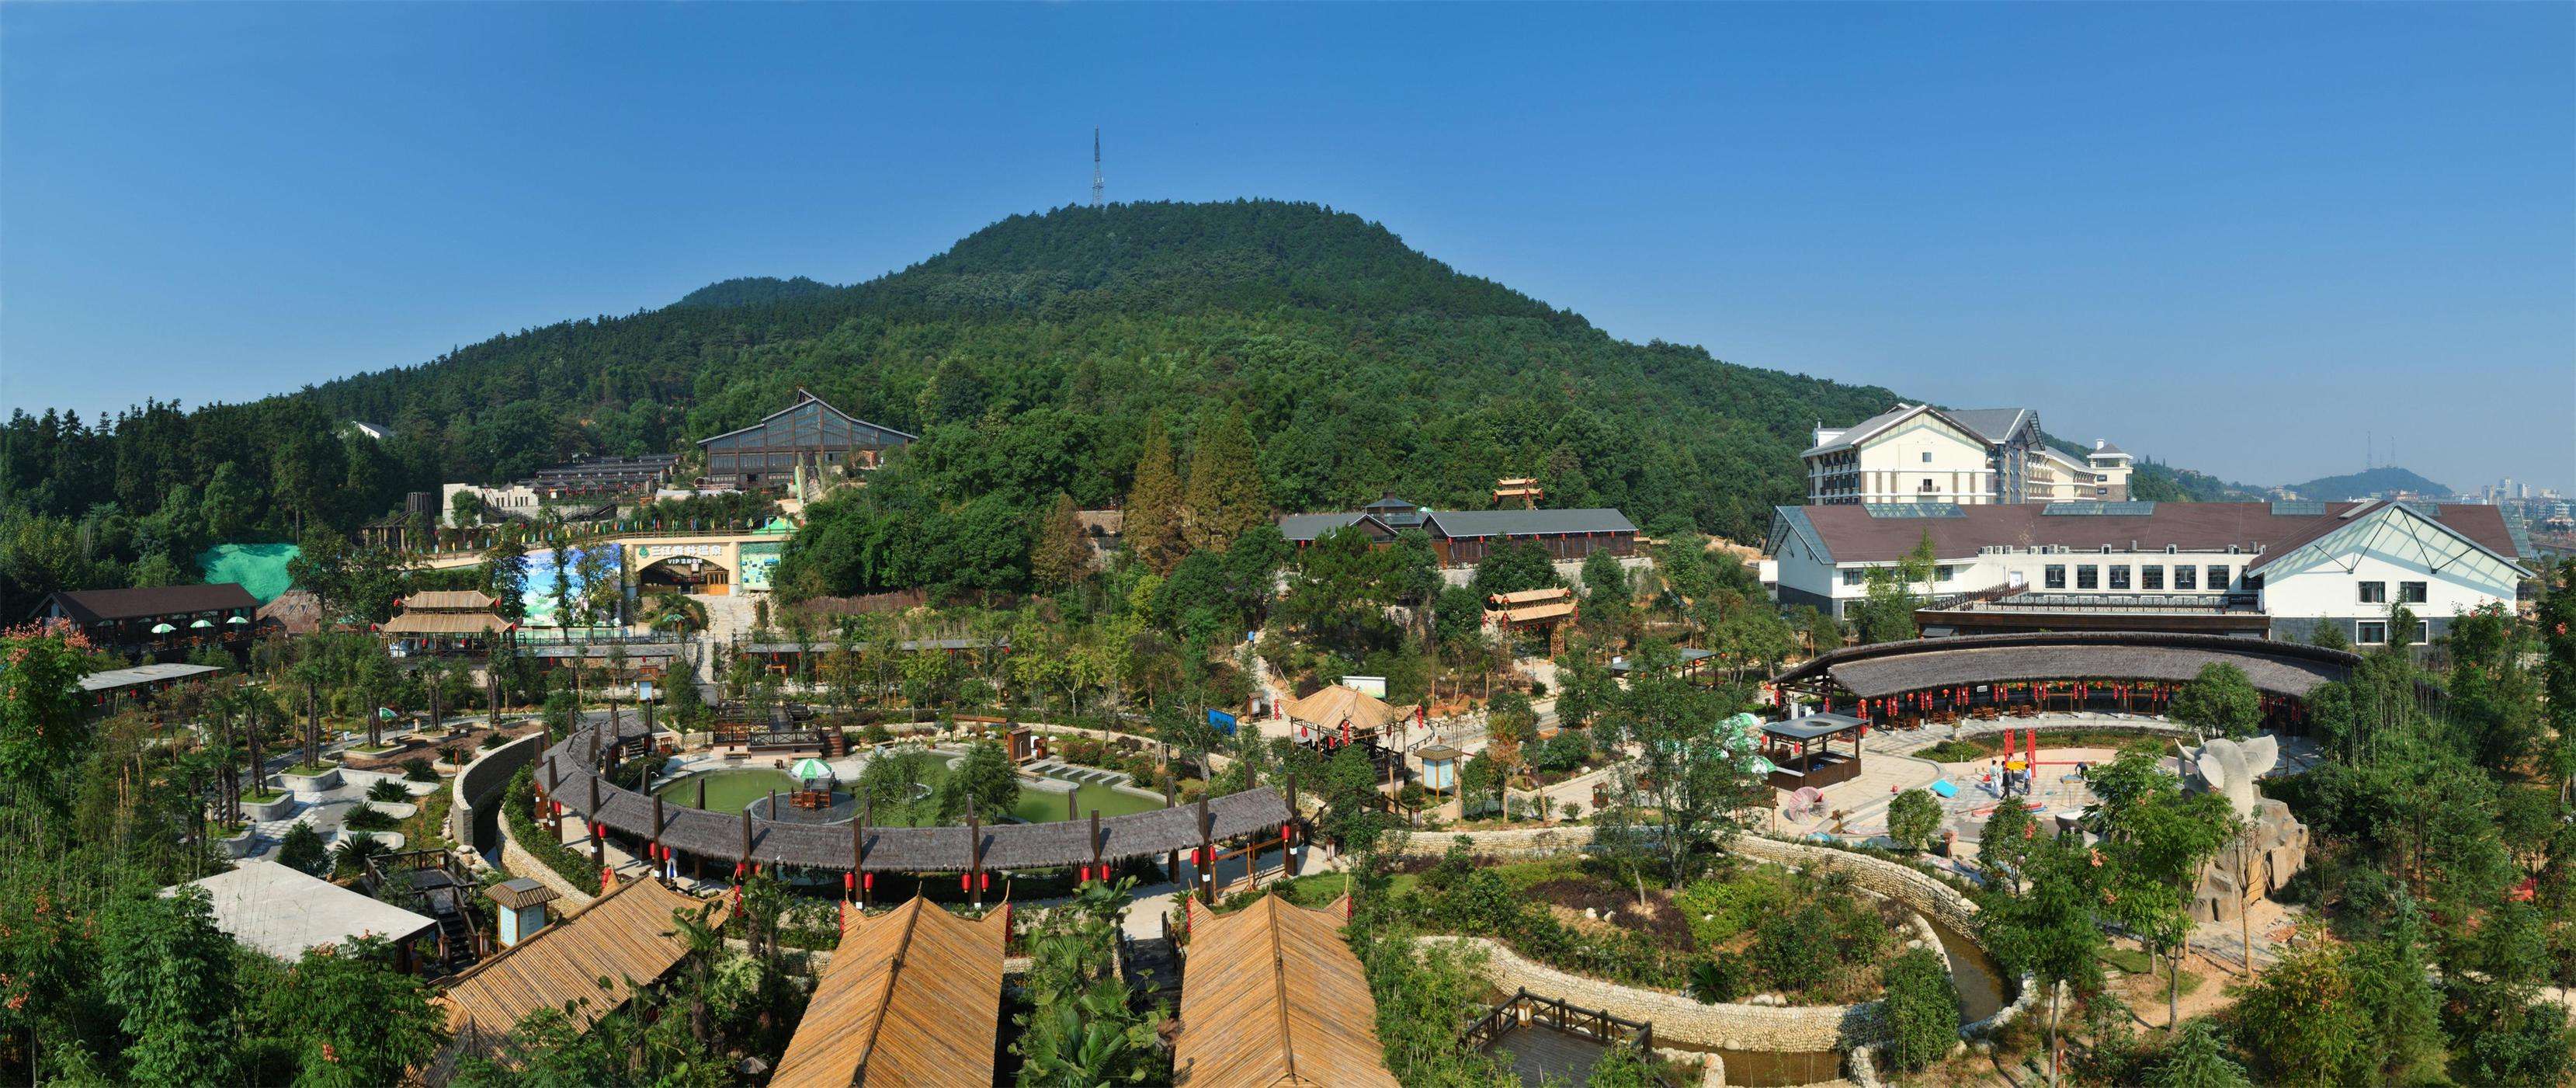 html景区特色:会议厅三江森林温泉度假区有装饰豪华,功能完备的大小